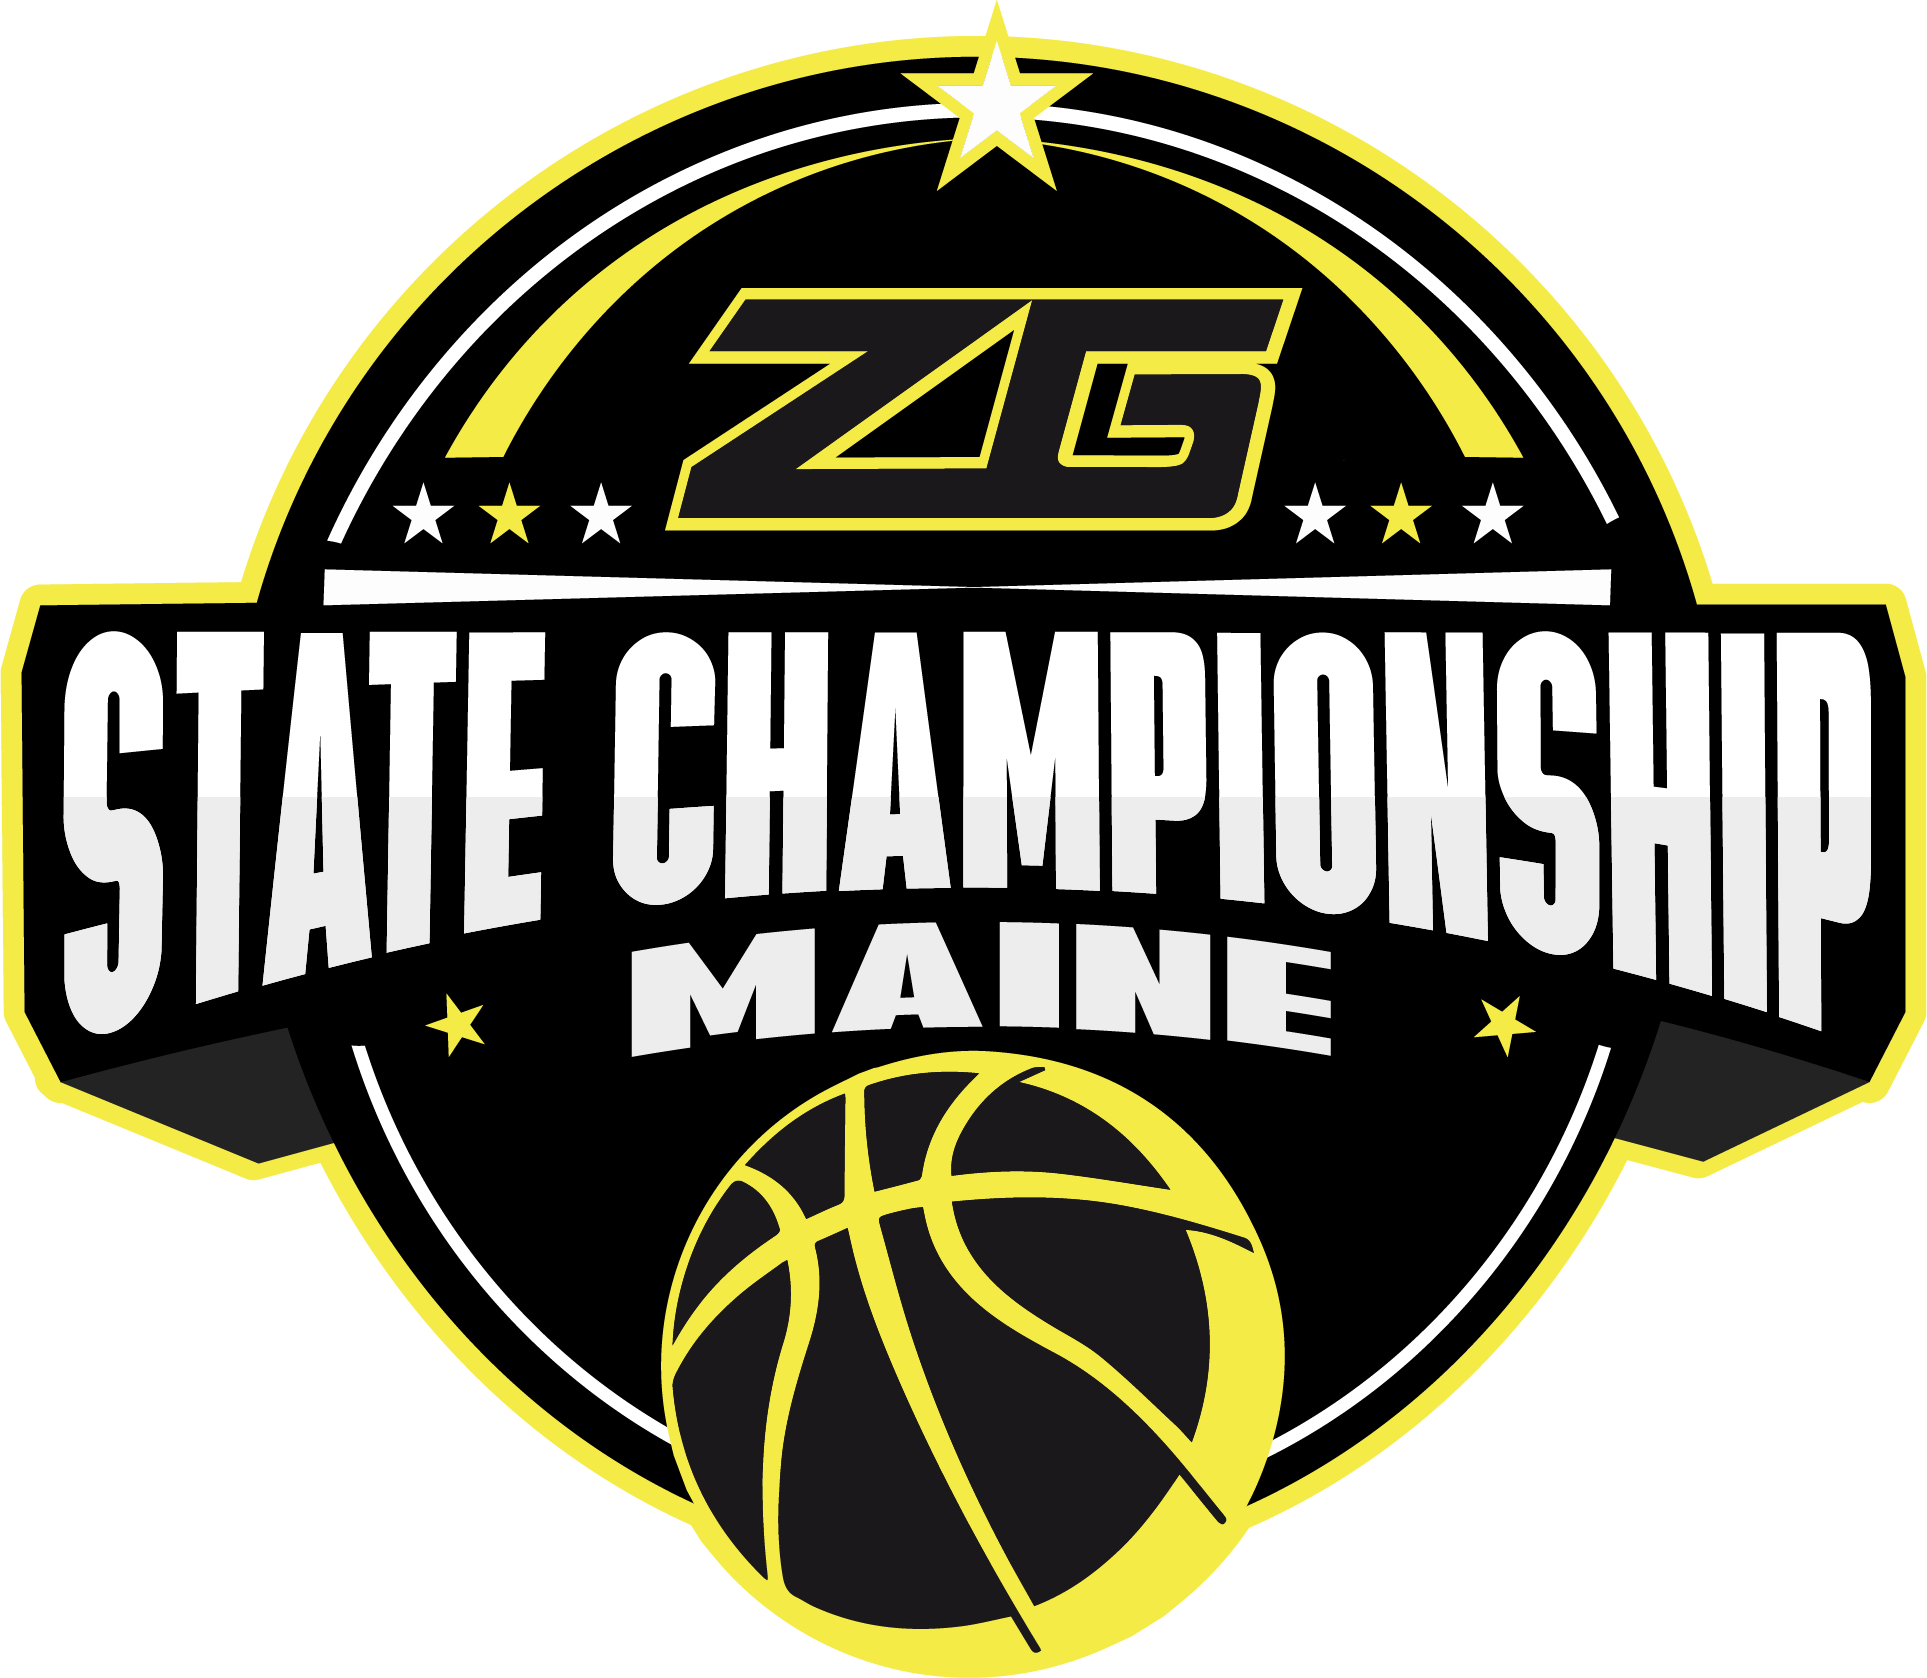 ZG State Championship Maine